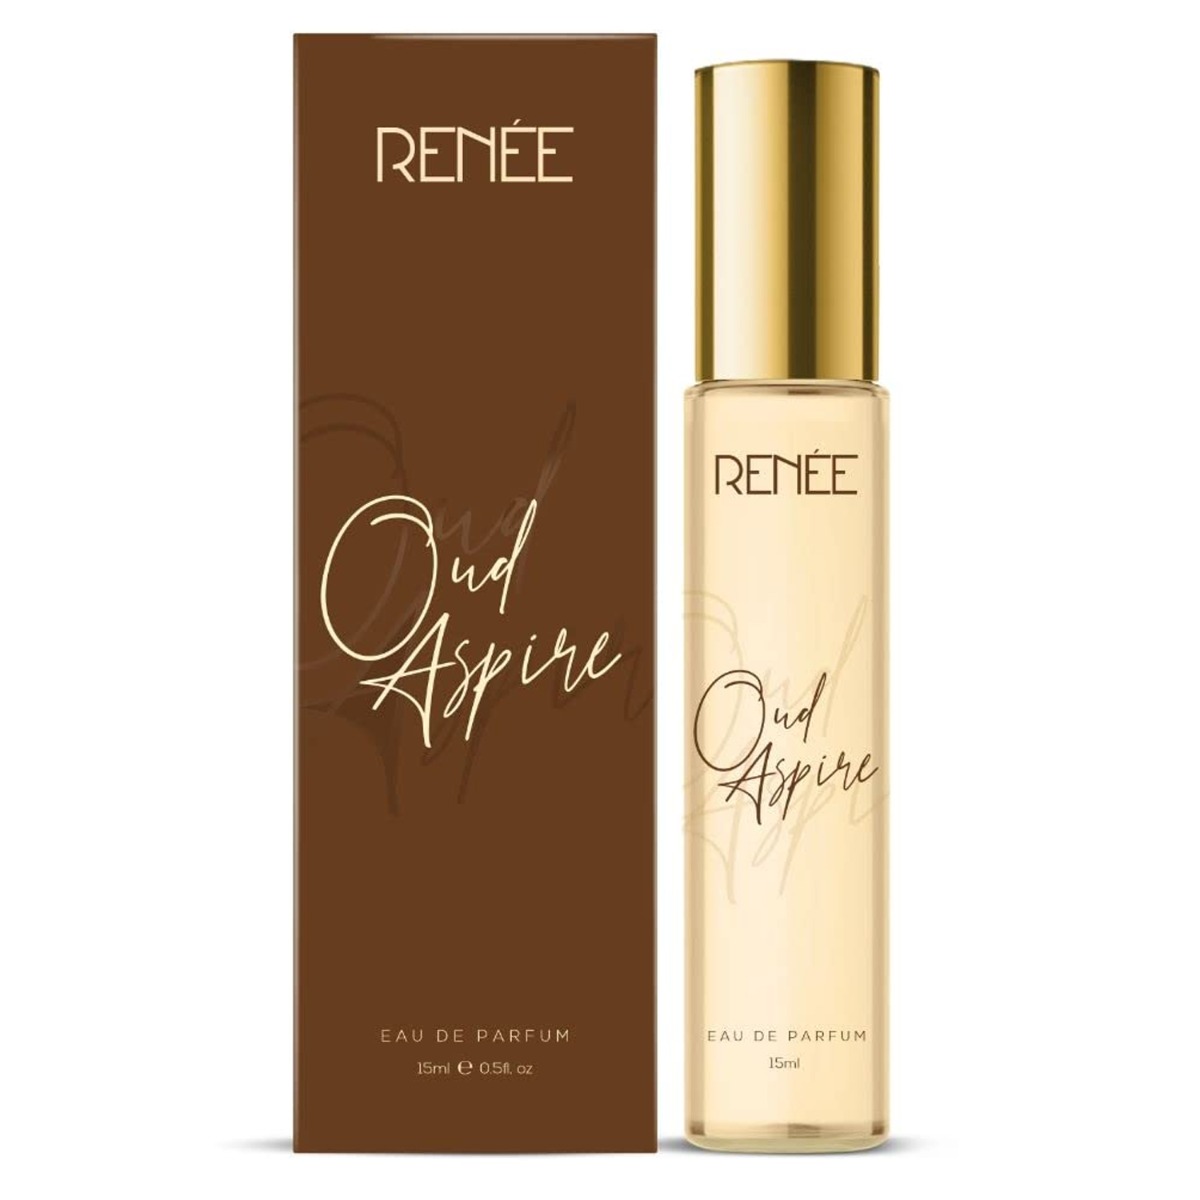 Renee Cosmetics Oud Aspire Eau De Parfum, 15ml